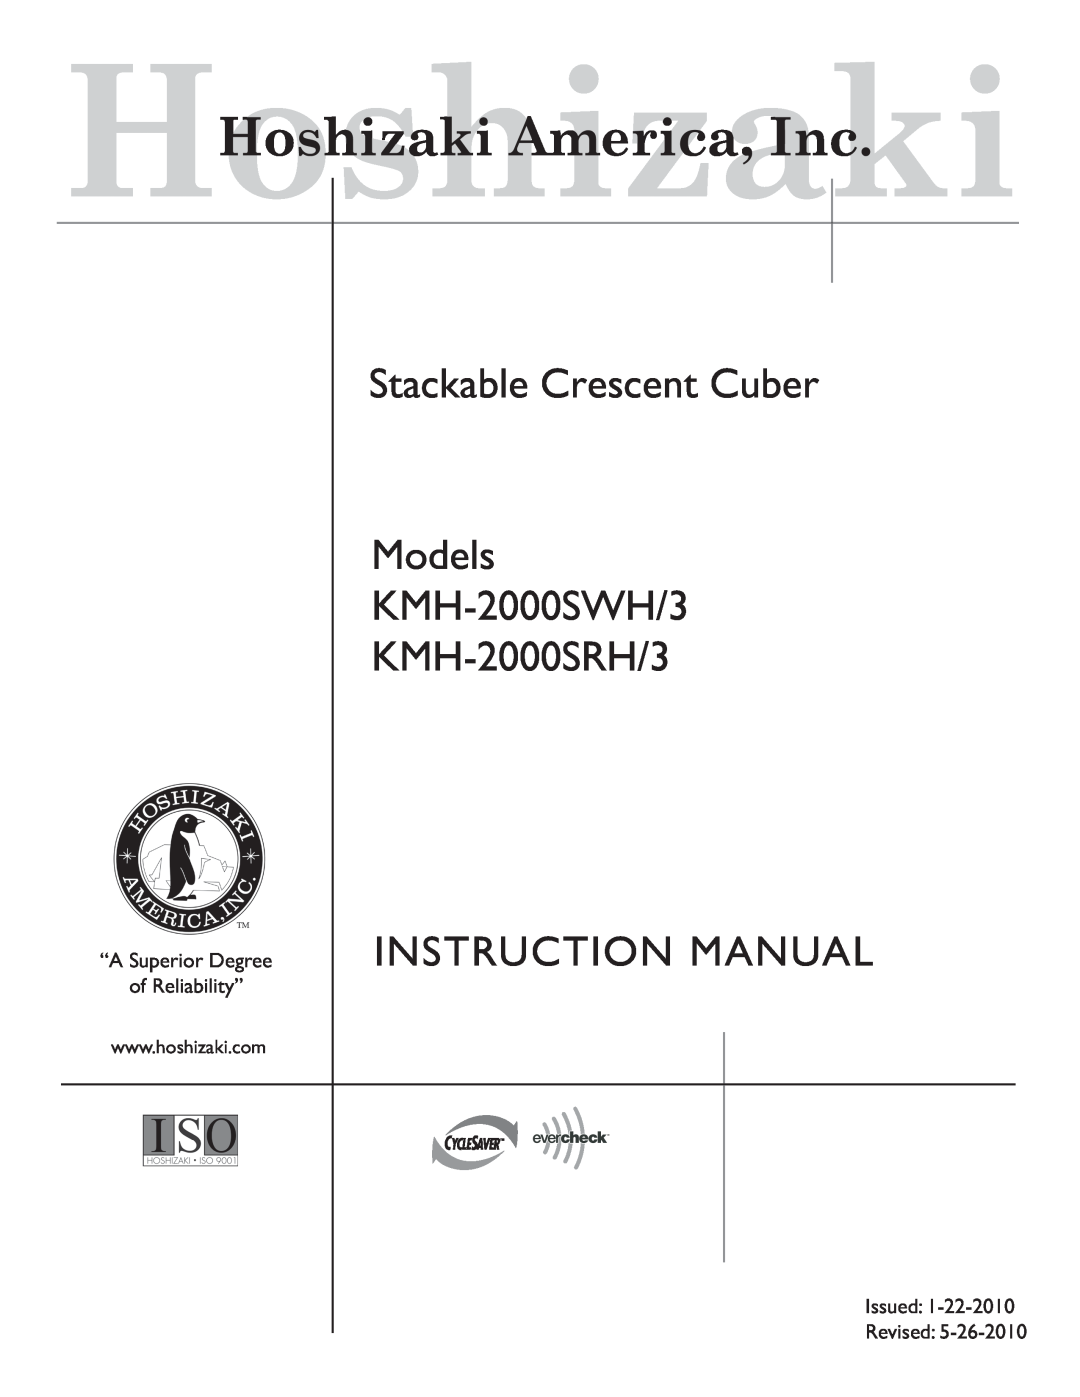 Hoshizaki instruction manual Stackable Crescent Cuber Models KMH-2000SWH/3, KMH-2000SRH/3 